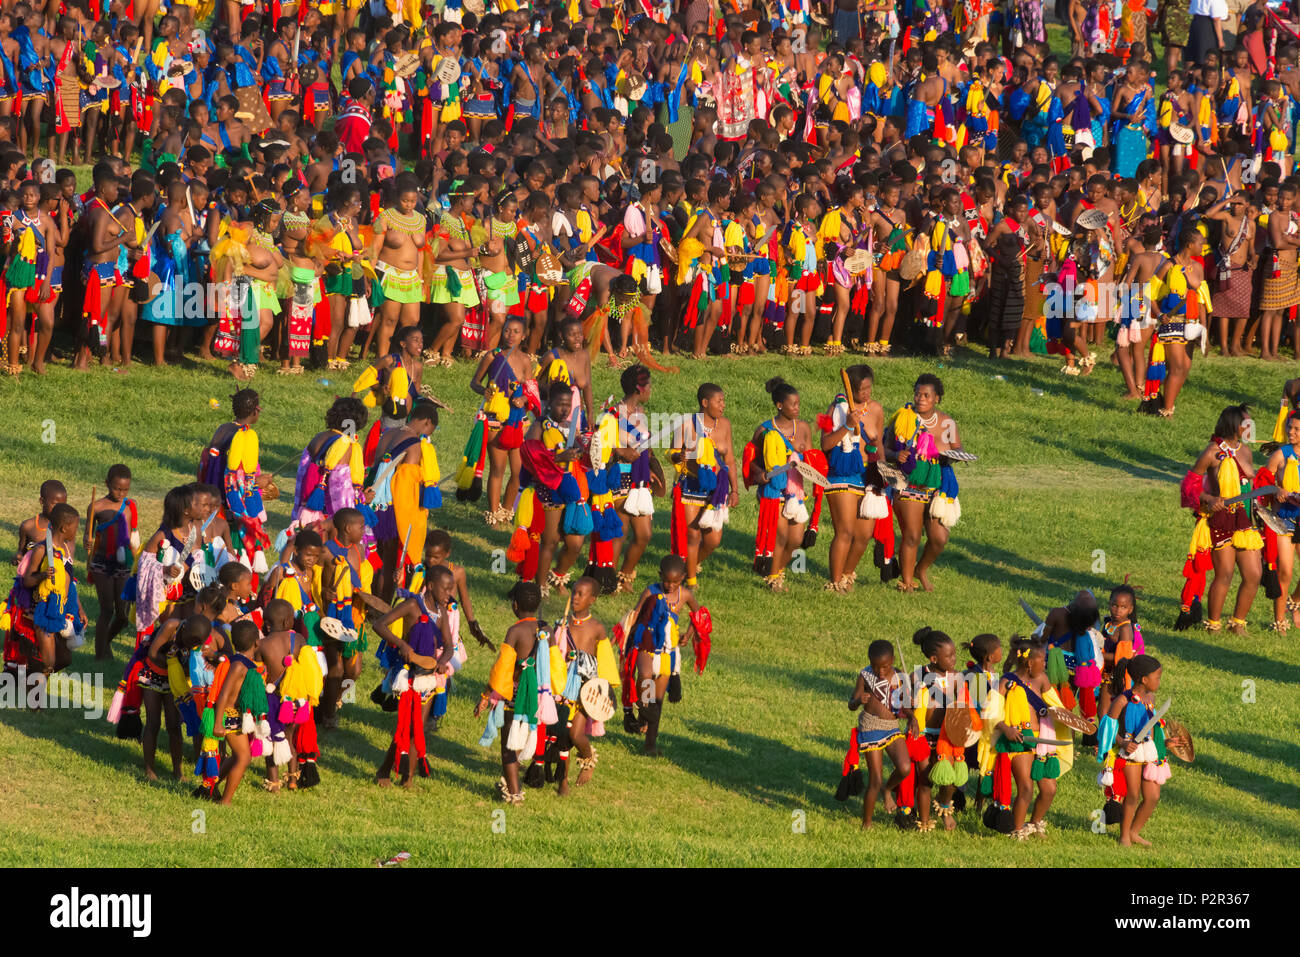 Swazi girls carrying sword parade at Umhlanga (Reed Dance Festival), Swaziland Stock Photo